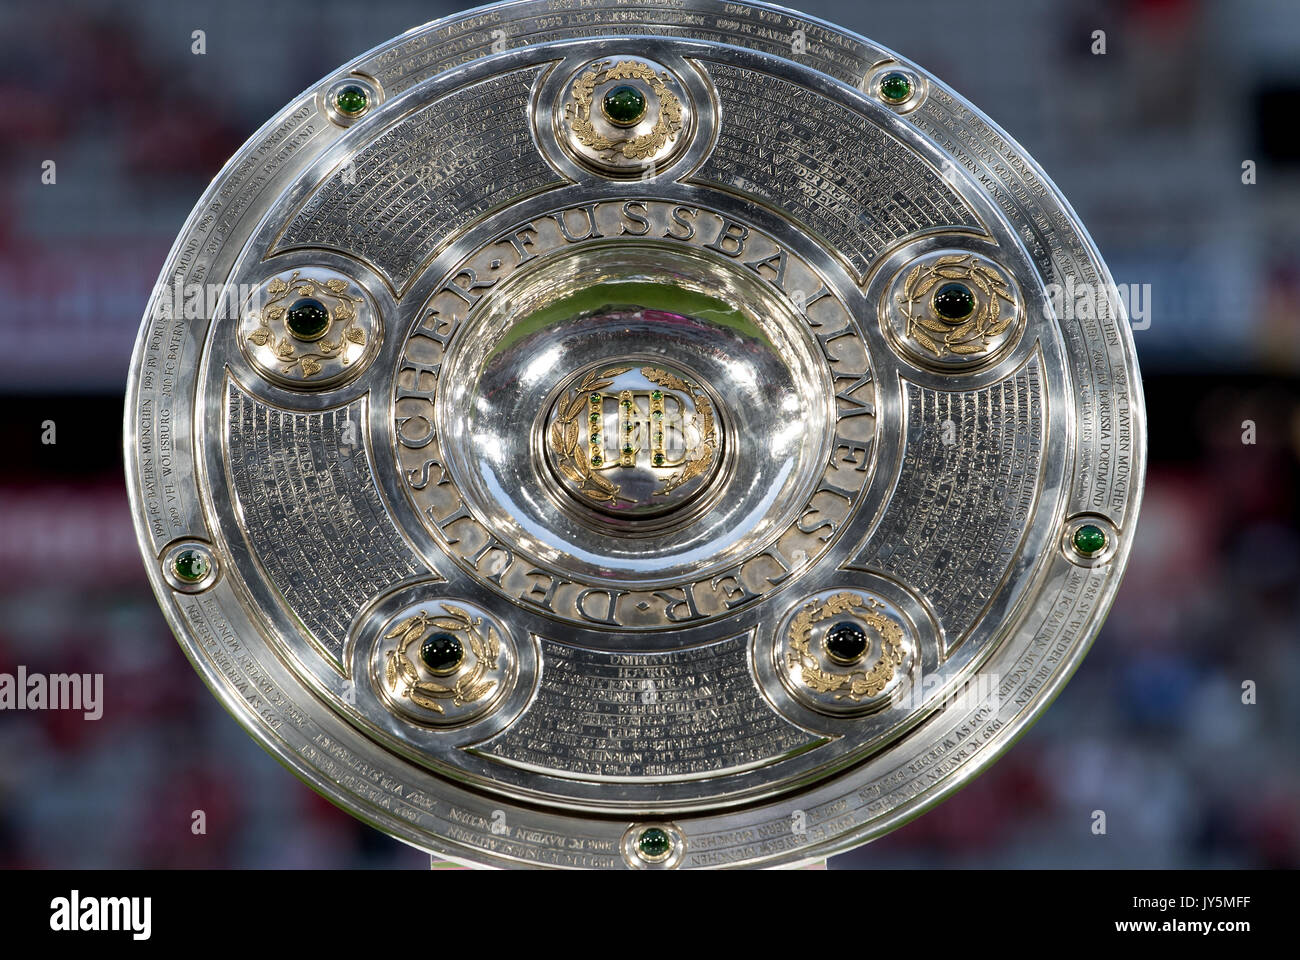 Bundesliga Trophy High Resolution Stock Photography and Images - Alamy